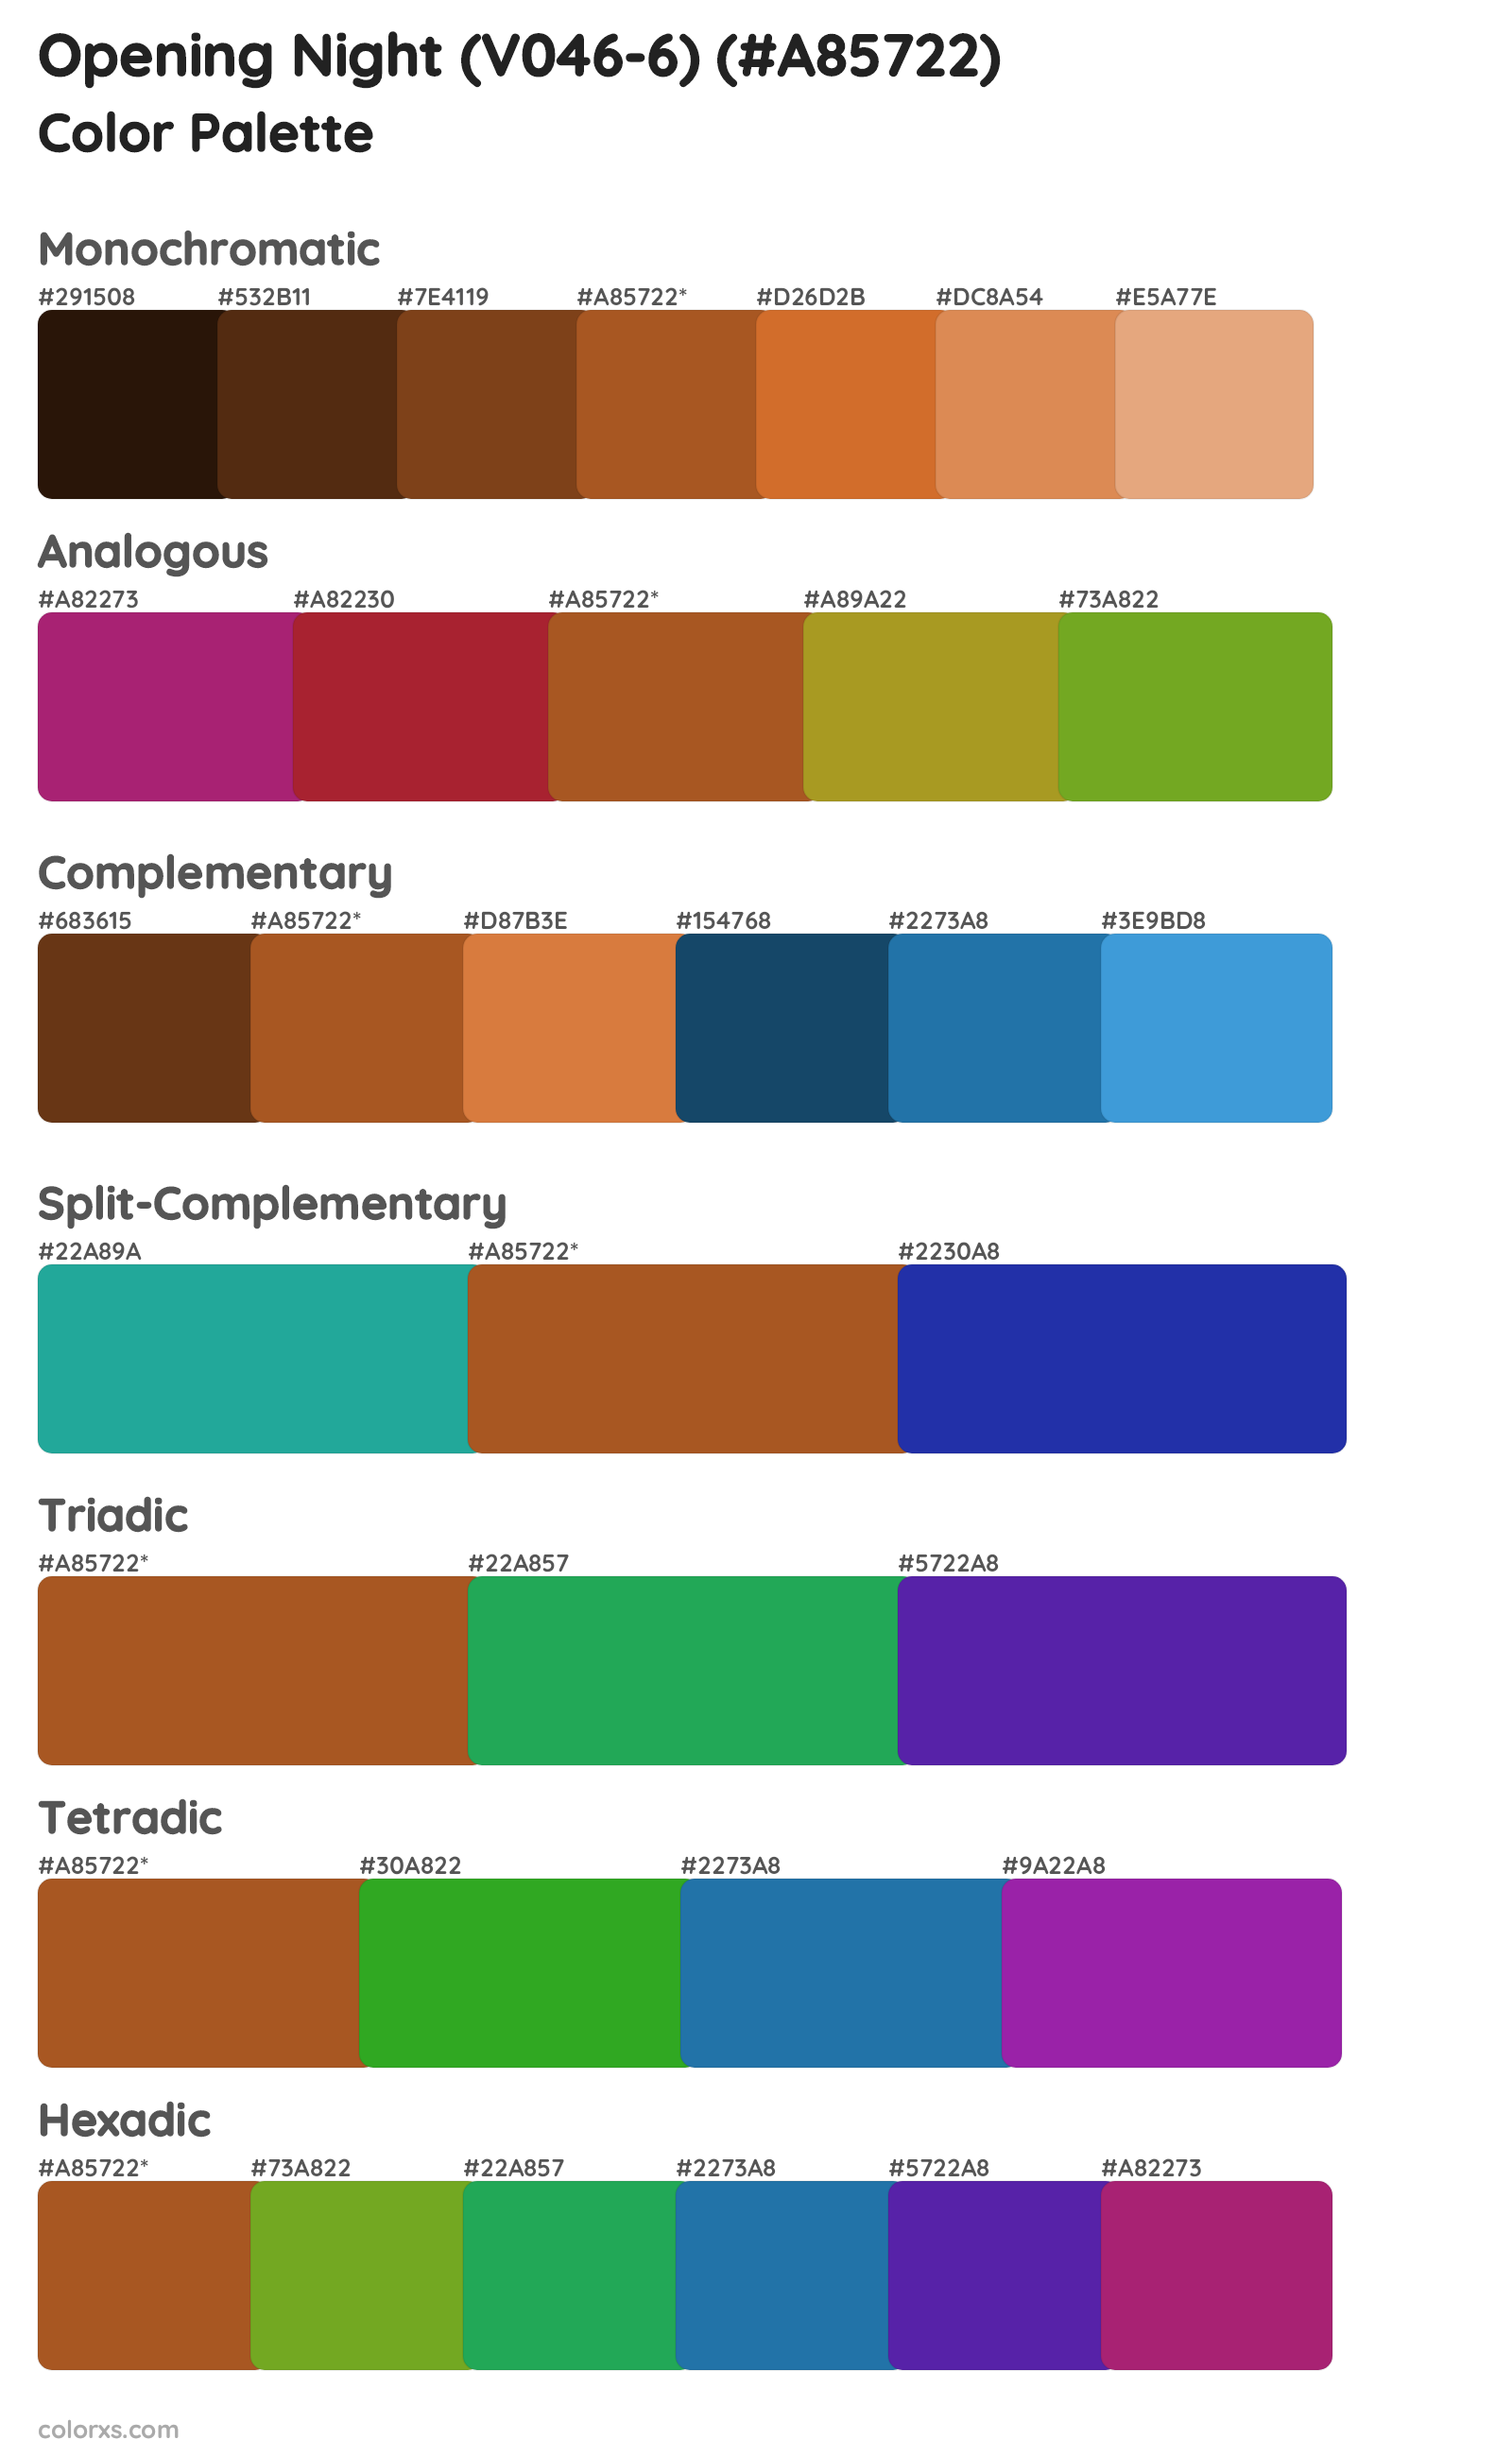 Opening Night (V046-6) Color Scheme Palettes